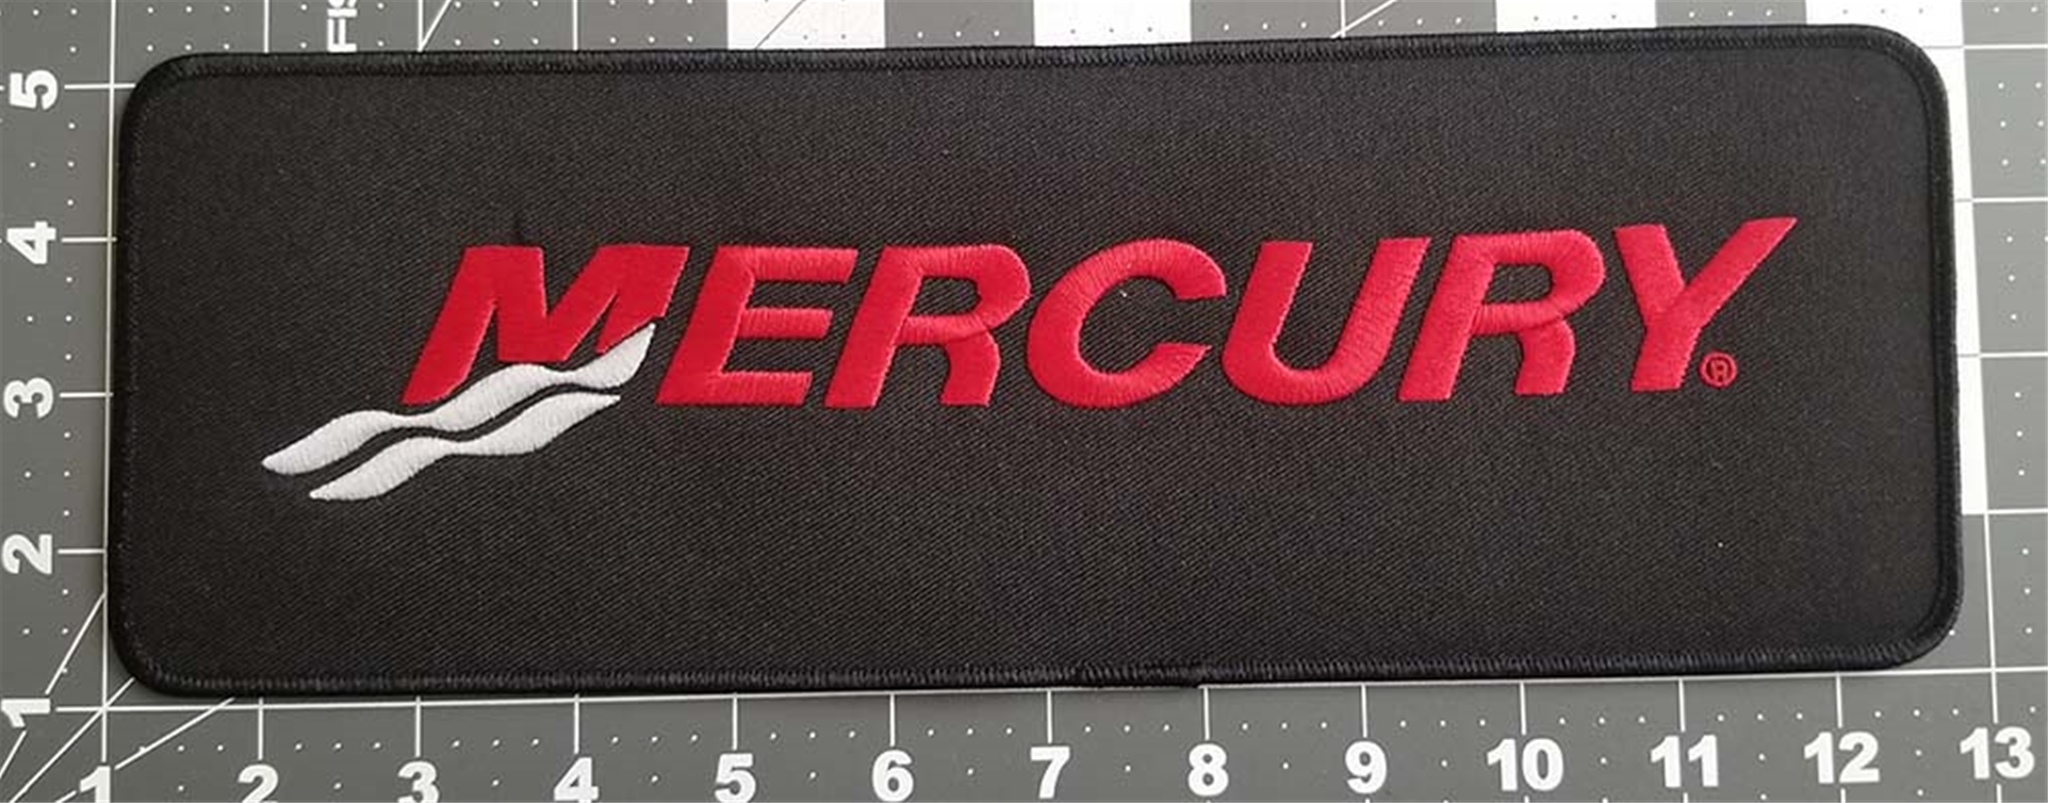 OEM Genuine Mercury Embroidered Large Logo Iron On Sew On Patch